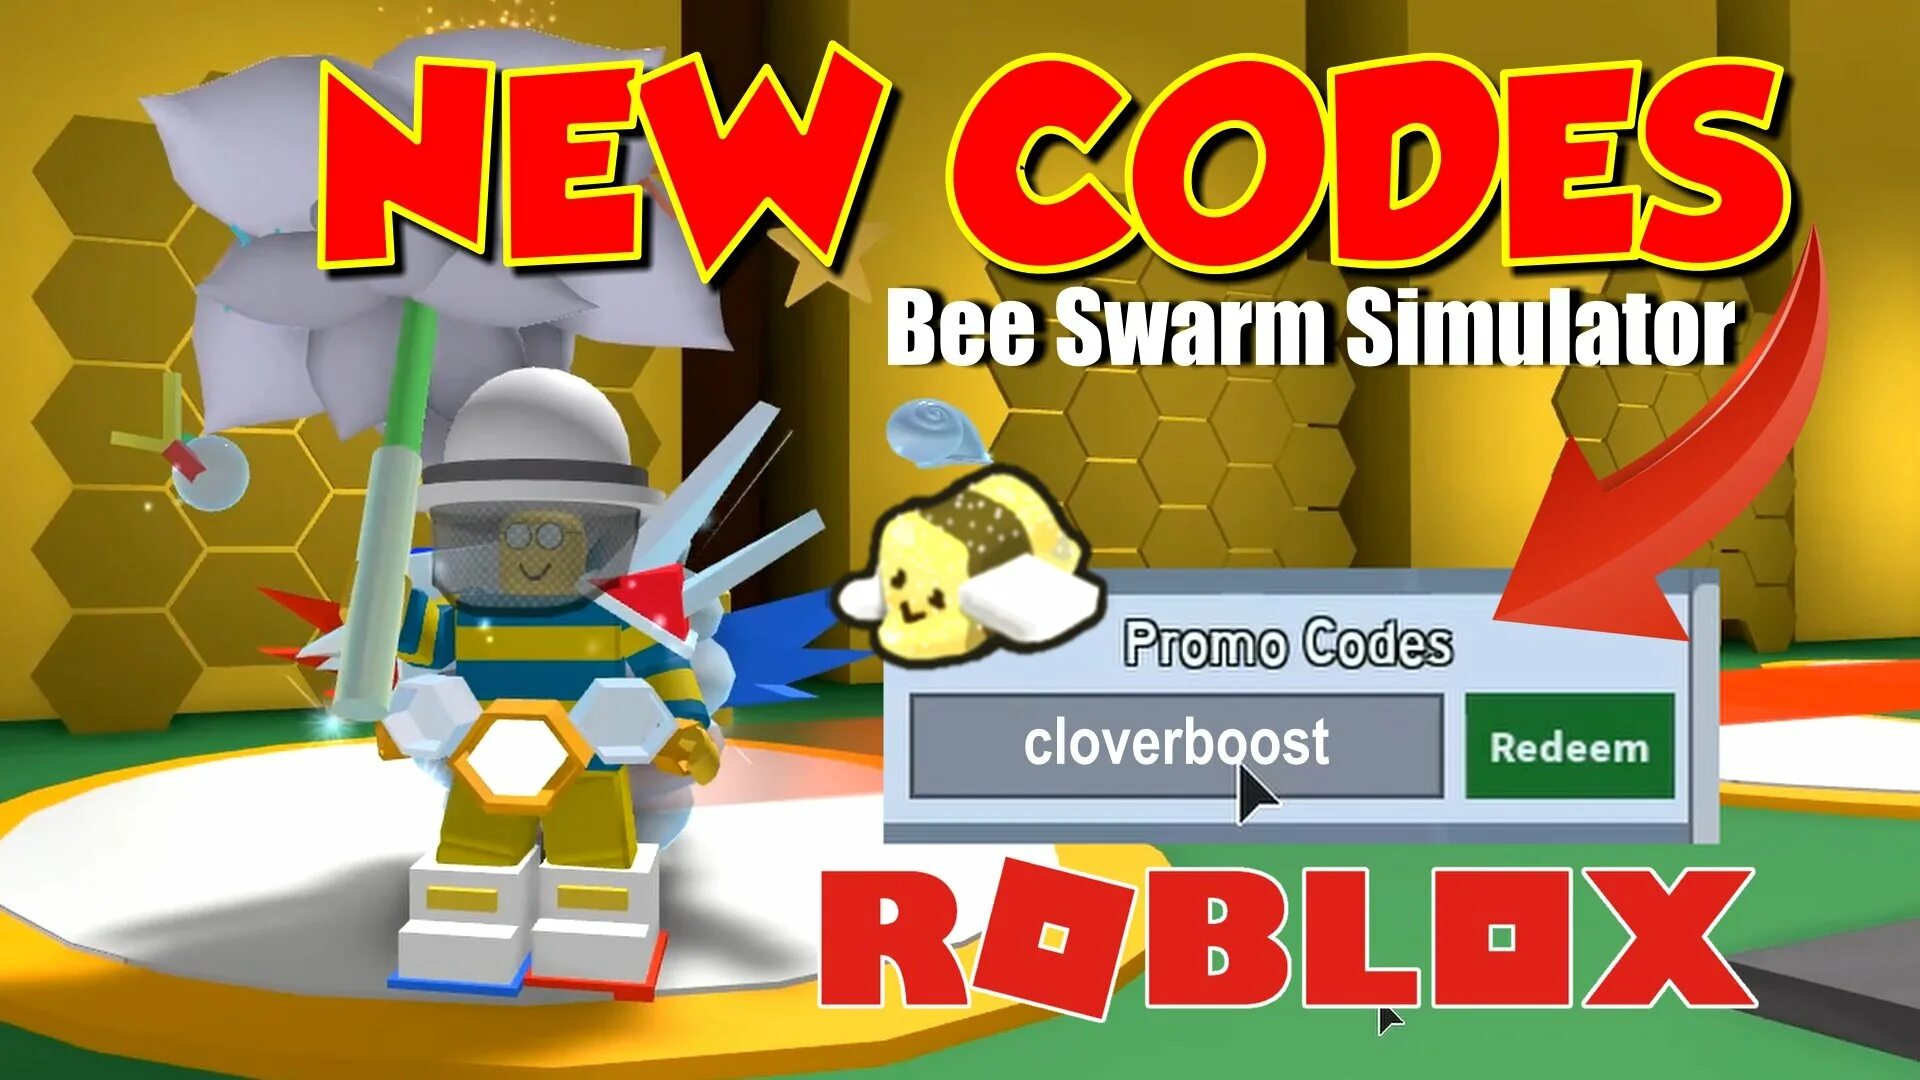 Swarm simulator роблокс. Bee Swarm Simulator codes. РОБЛОКС Bee Swarm Simulator. РОБЛОКС промокоды Bee Swarm Simulator. Roblox Bee Swarm Simulator codes.